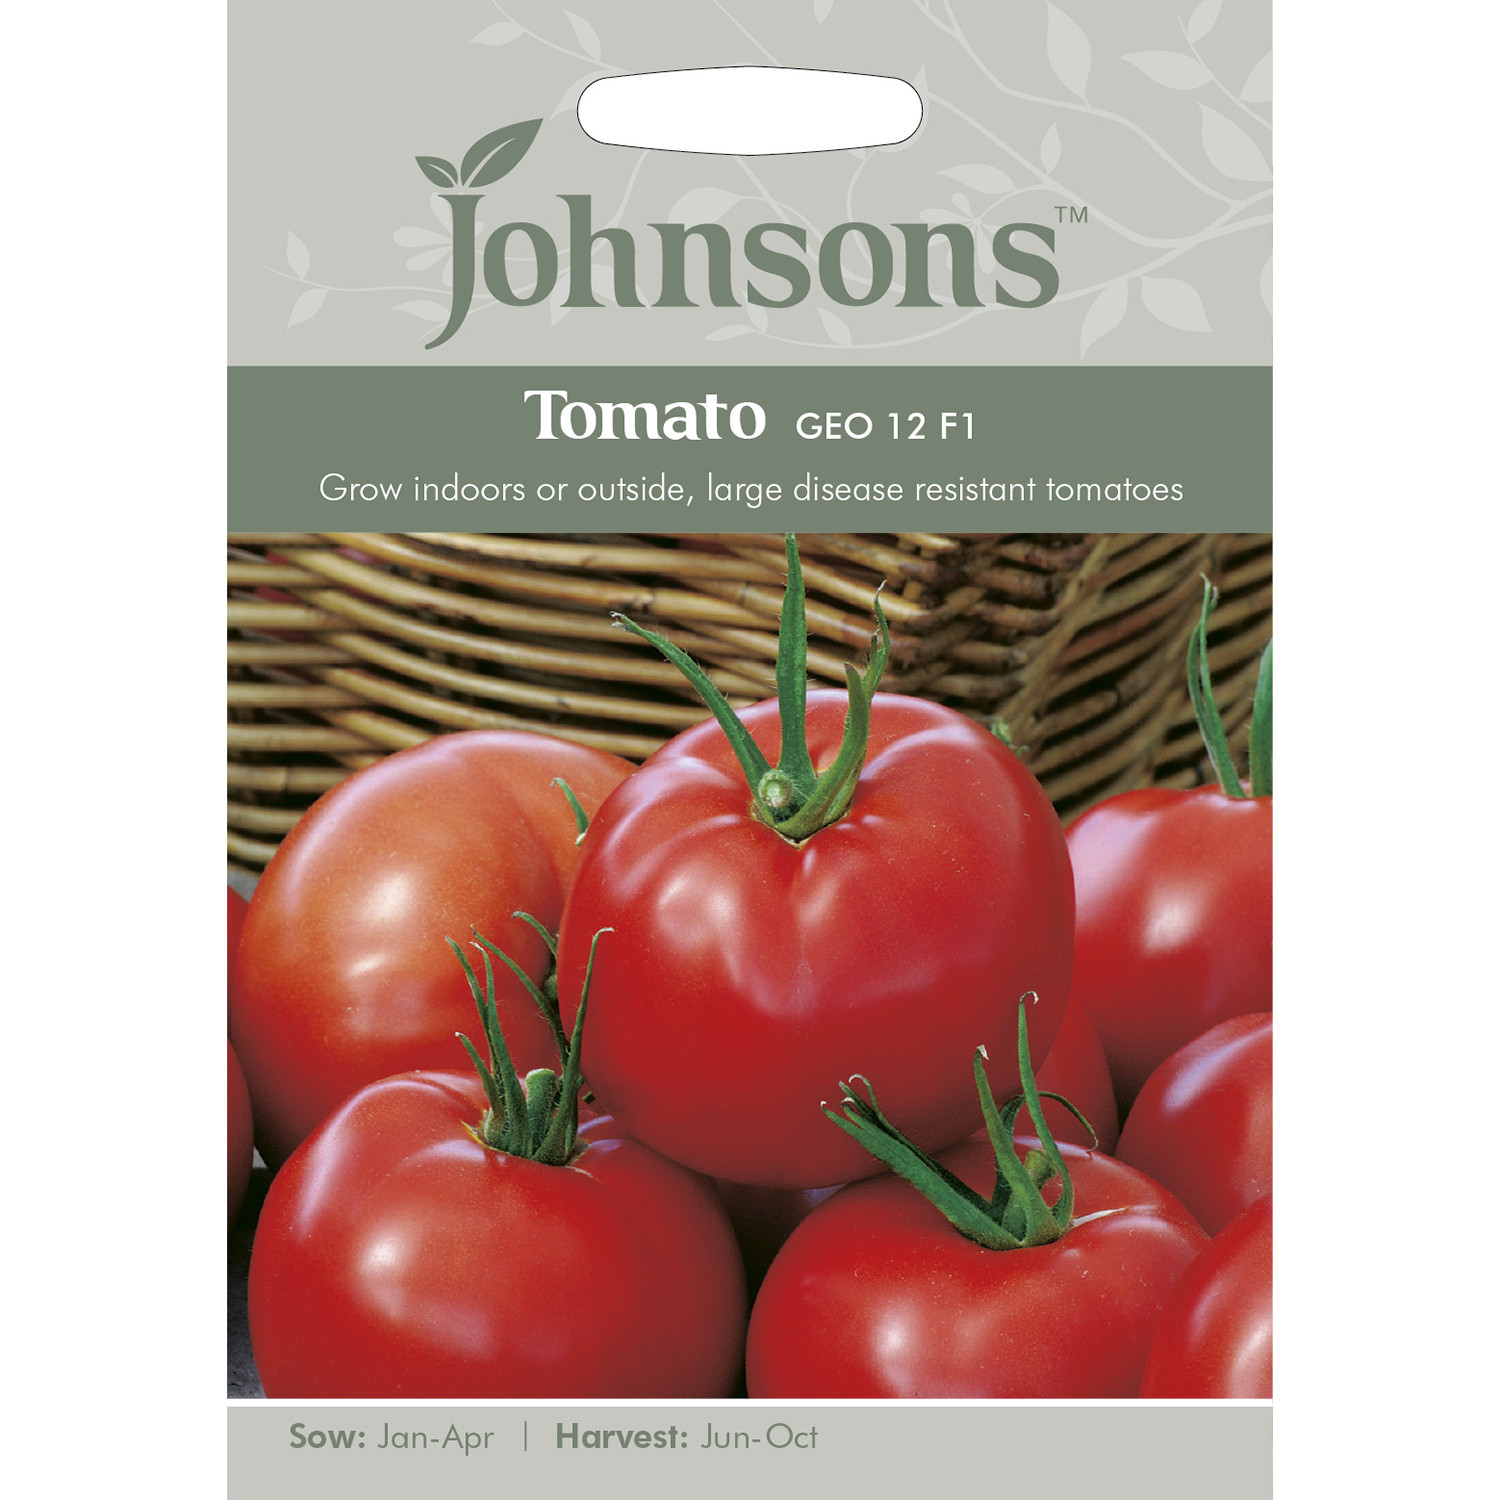 Johnsons Geo 12 F1 Tomato Seeds Image 2